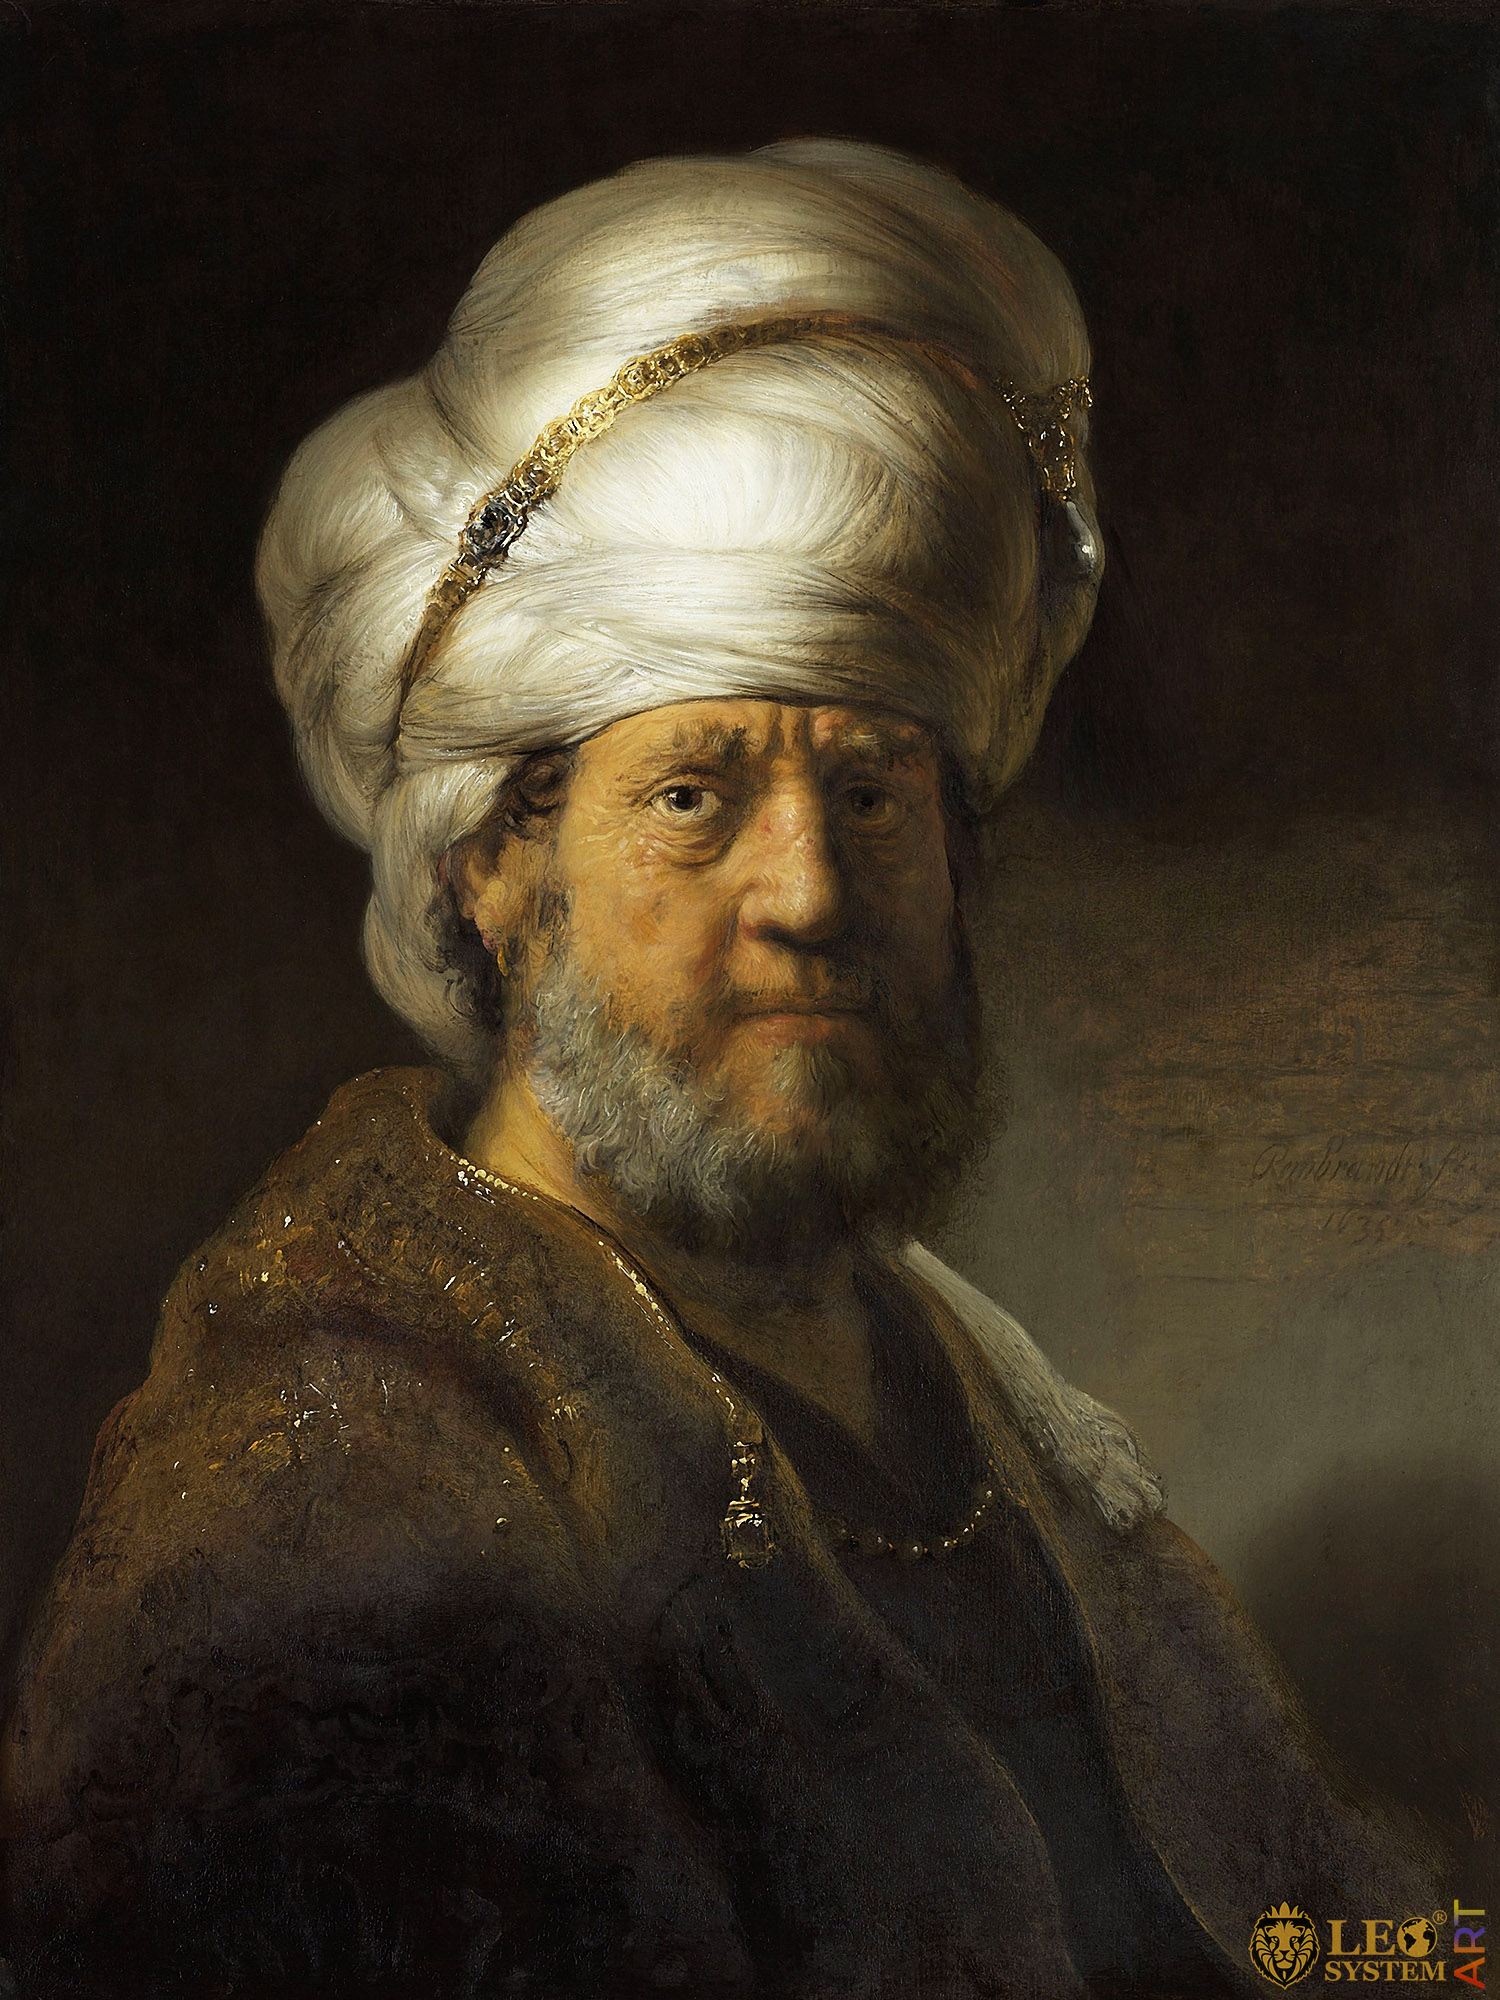 Man in Oriental Clothing, Painter: Rembrandt van Rijn, 1635, Dutch Painting